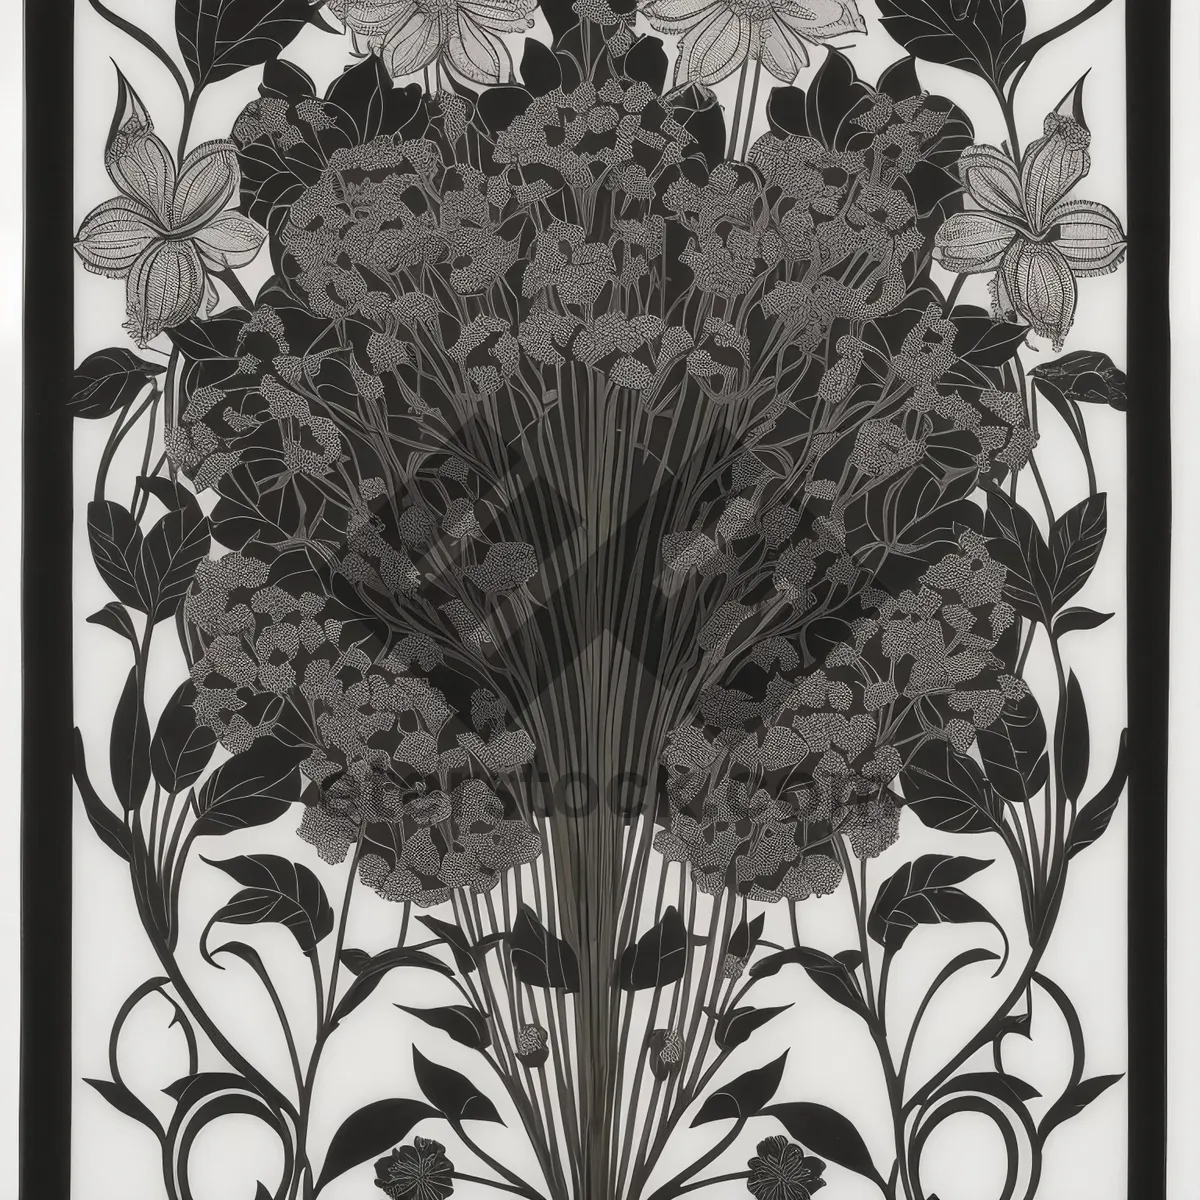 Picture of Vintage Floral Wallpaper Pattern with Decorative Leaf Motifs